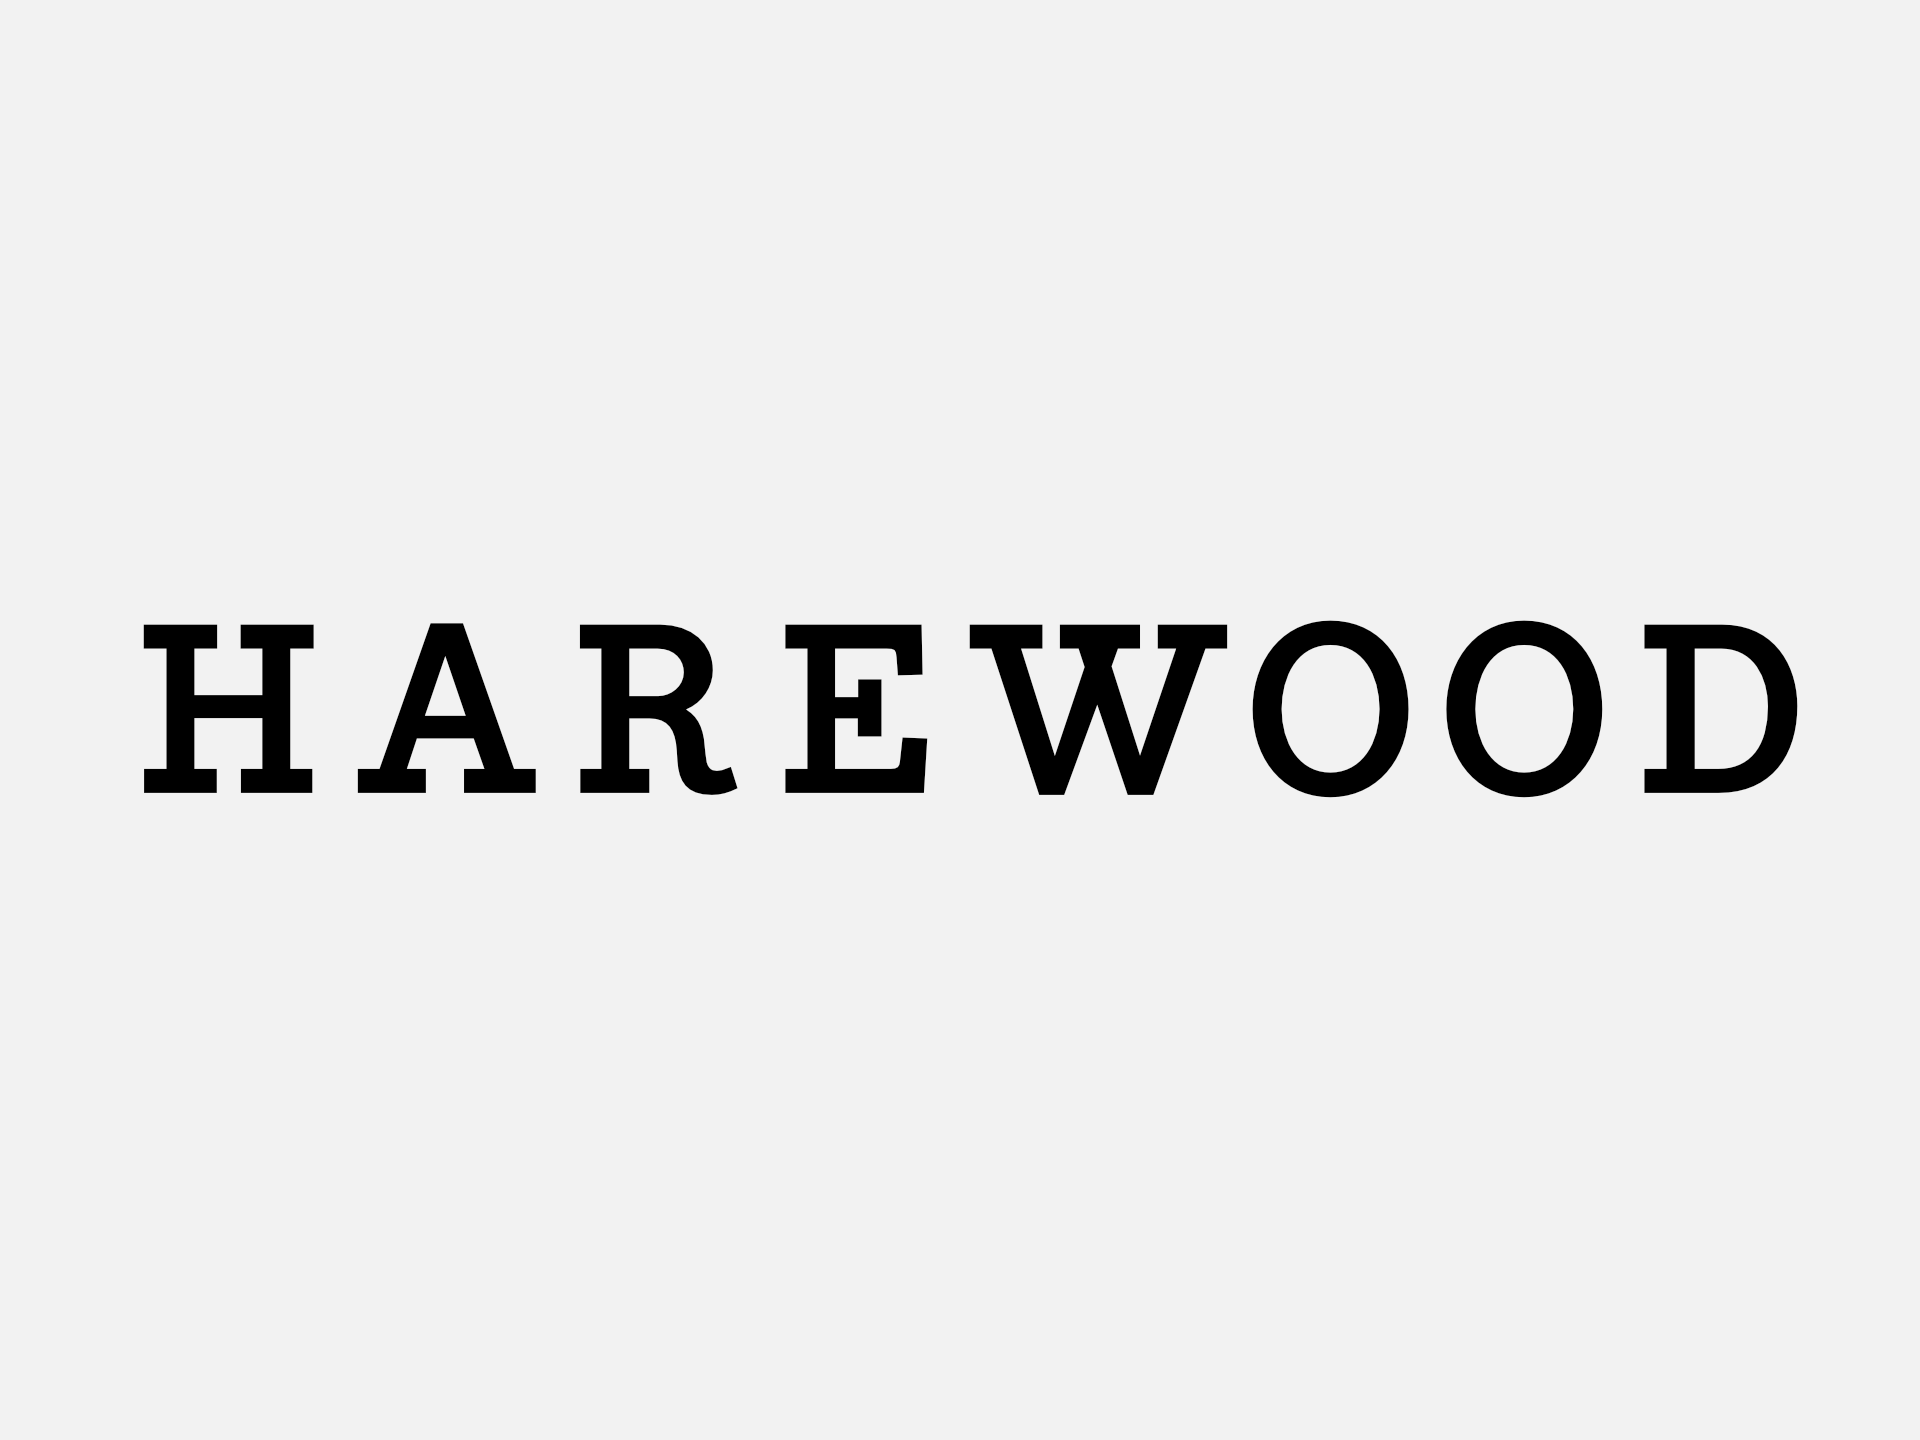 Harewood wordmark